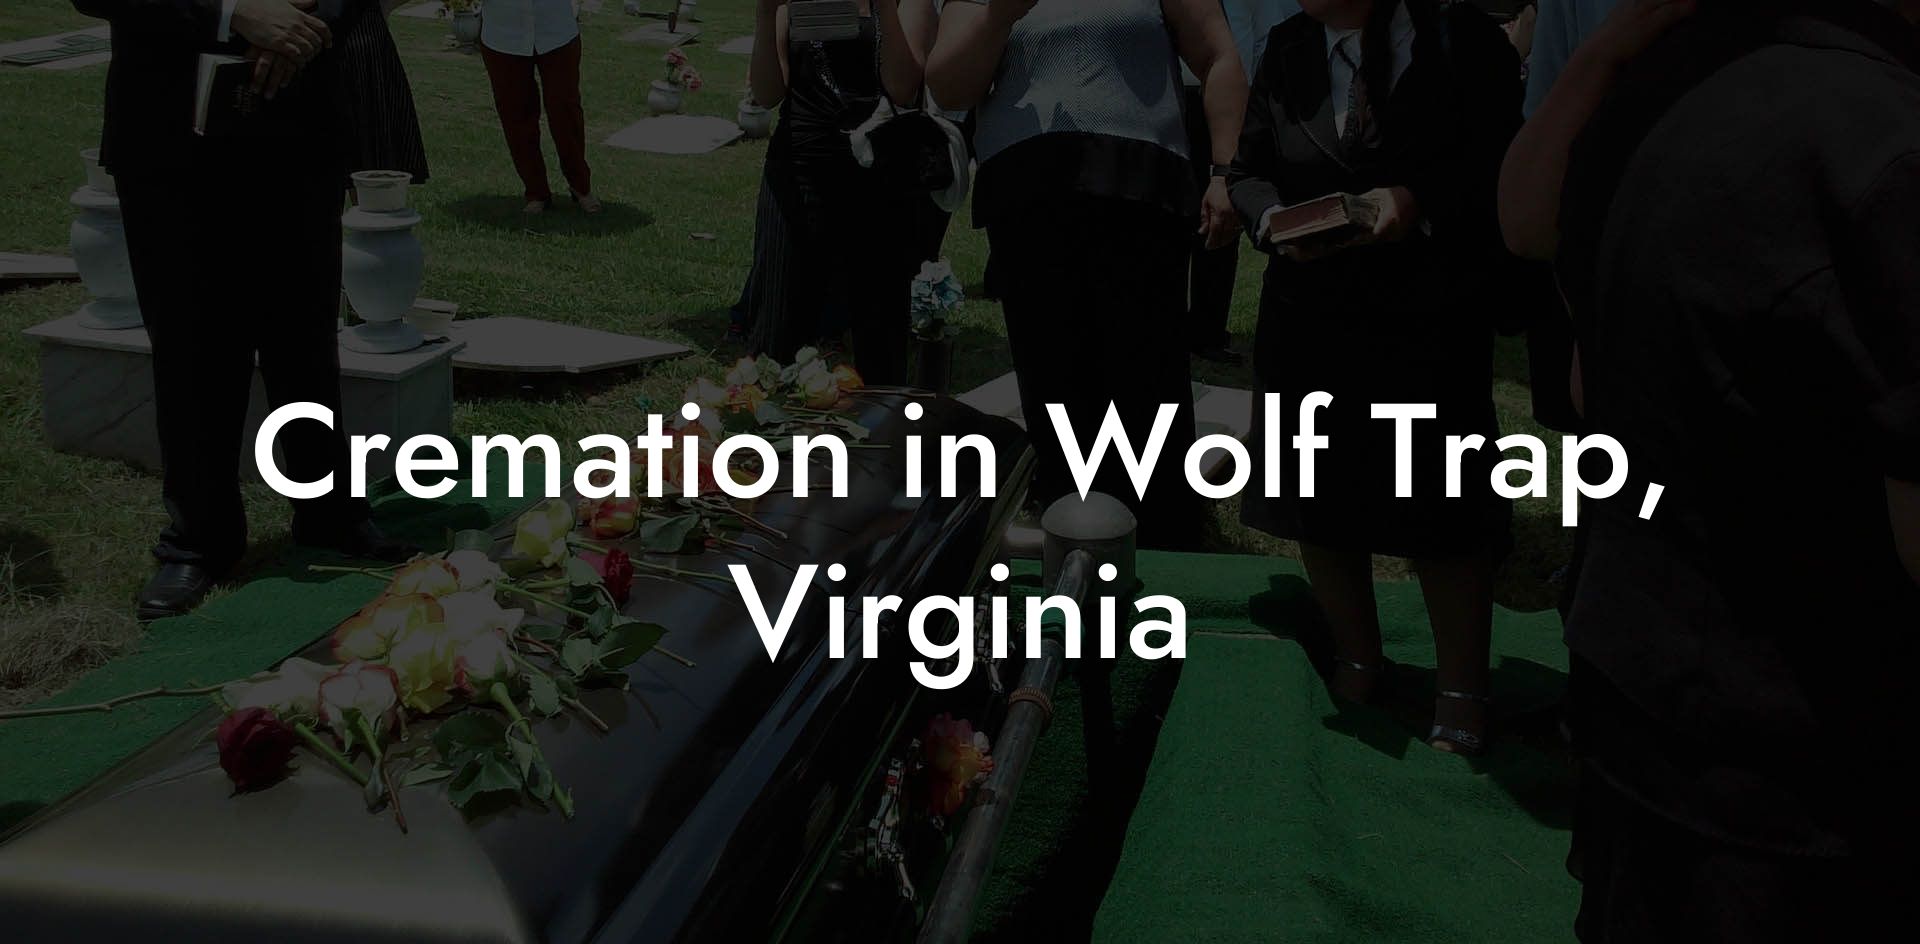 Cremation in Wolf Trap, Virginia